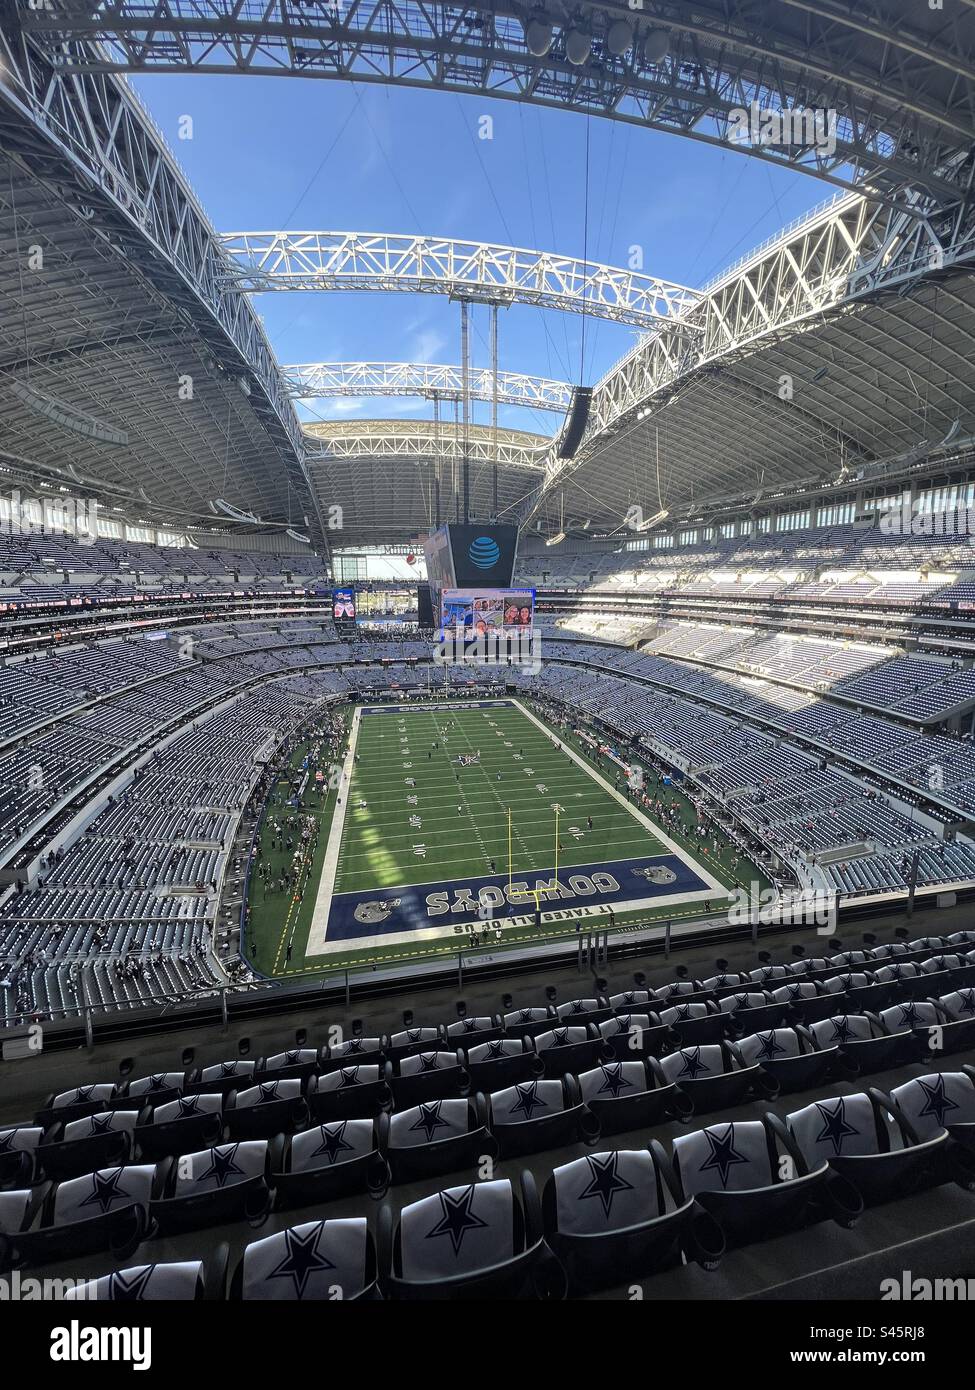 AT&T Stadium — Cowboys vs Bears October 30, 2022 Stock Photo